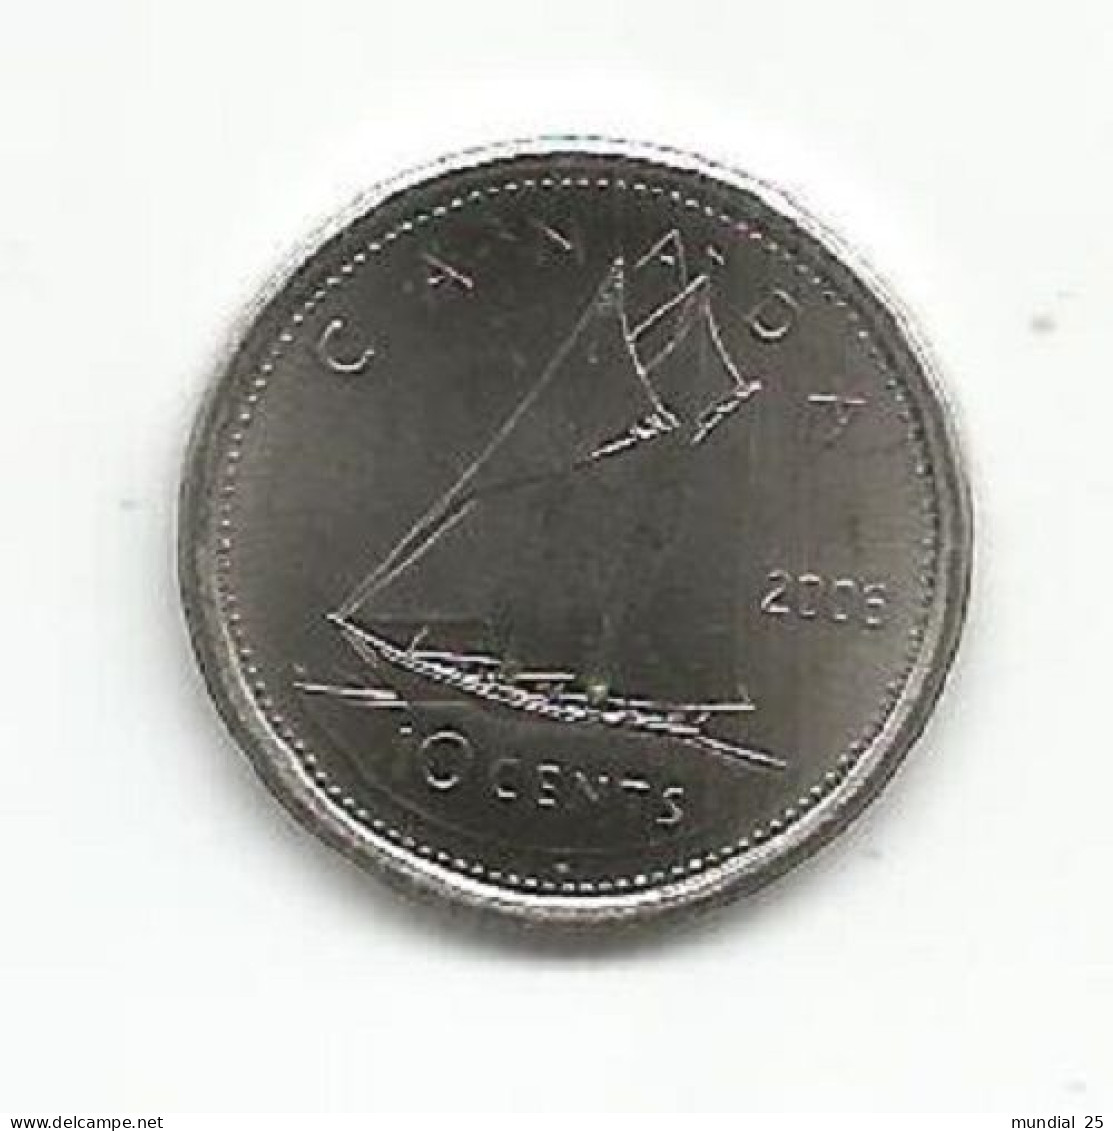 CANADA 10 CENTS 2006 (P) - Canada